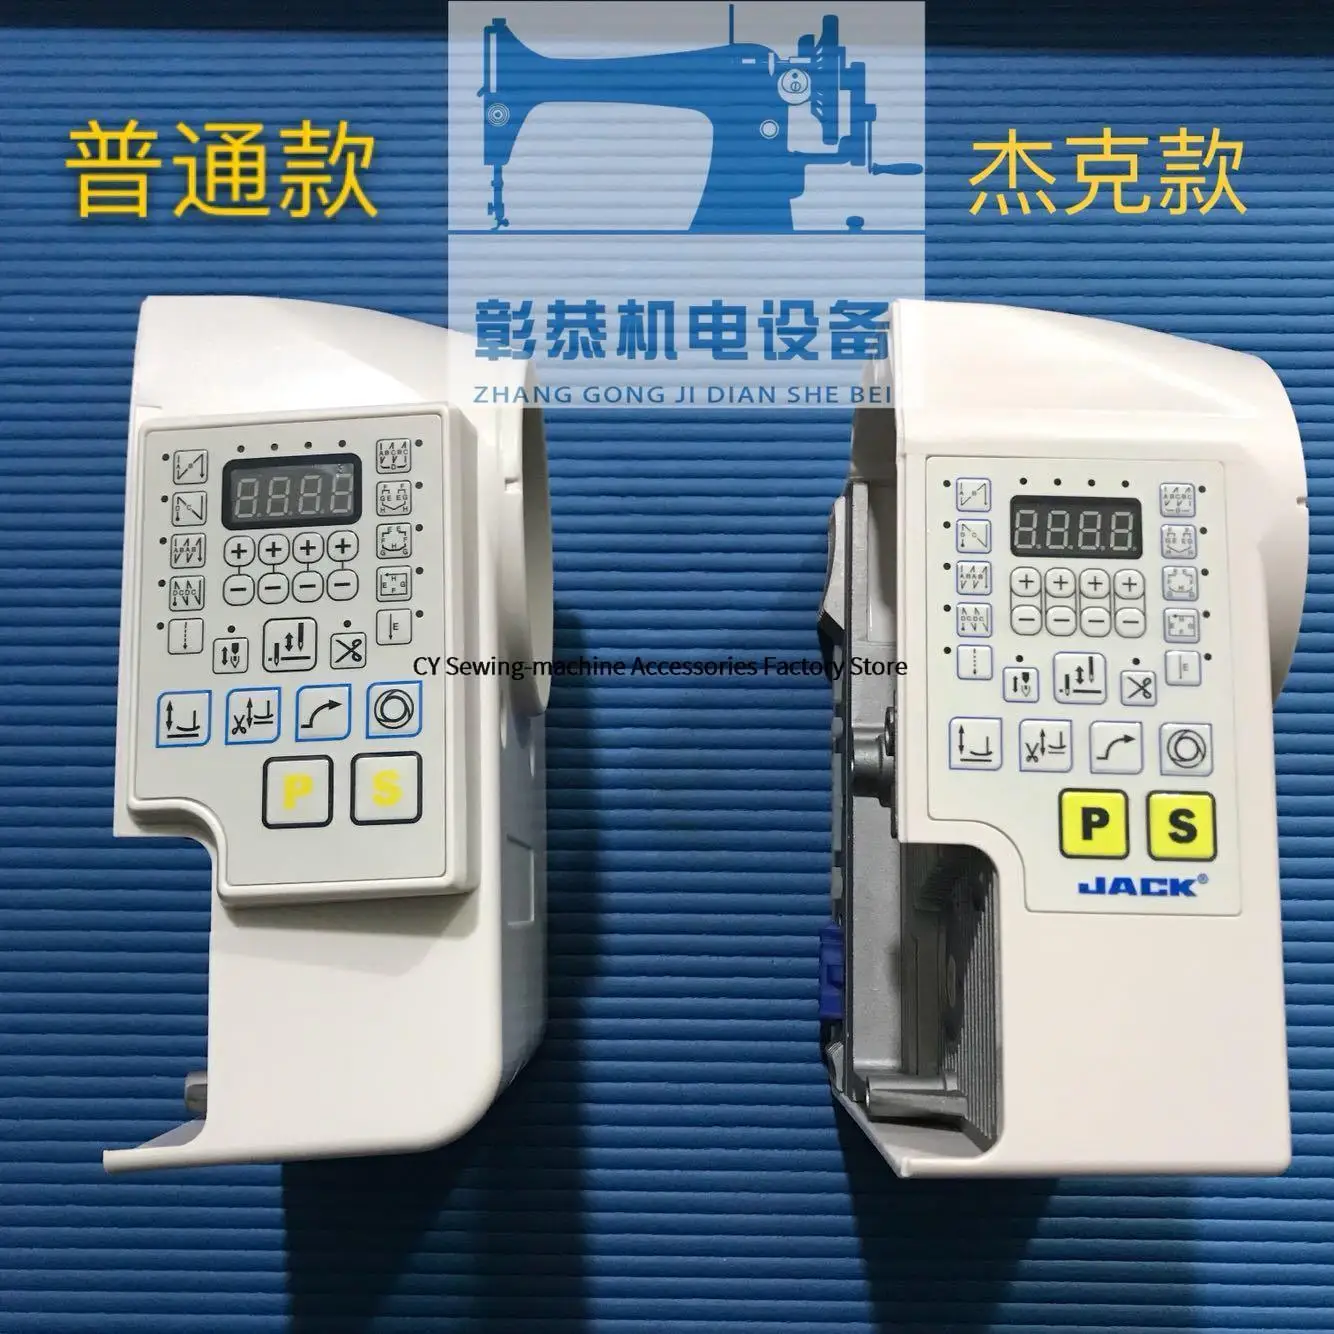 

New Original Qixing Second Generation Control Box Ac Servo Controller 220v for Zoje Jack Joyee Baoyu Xunli BCQ Sewing Machine